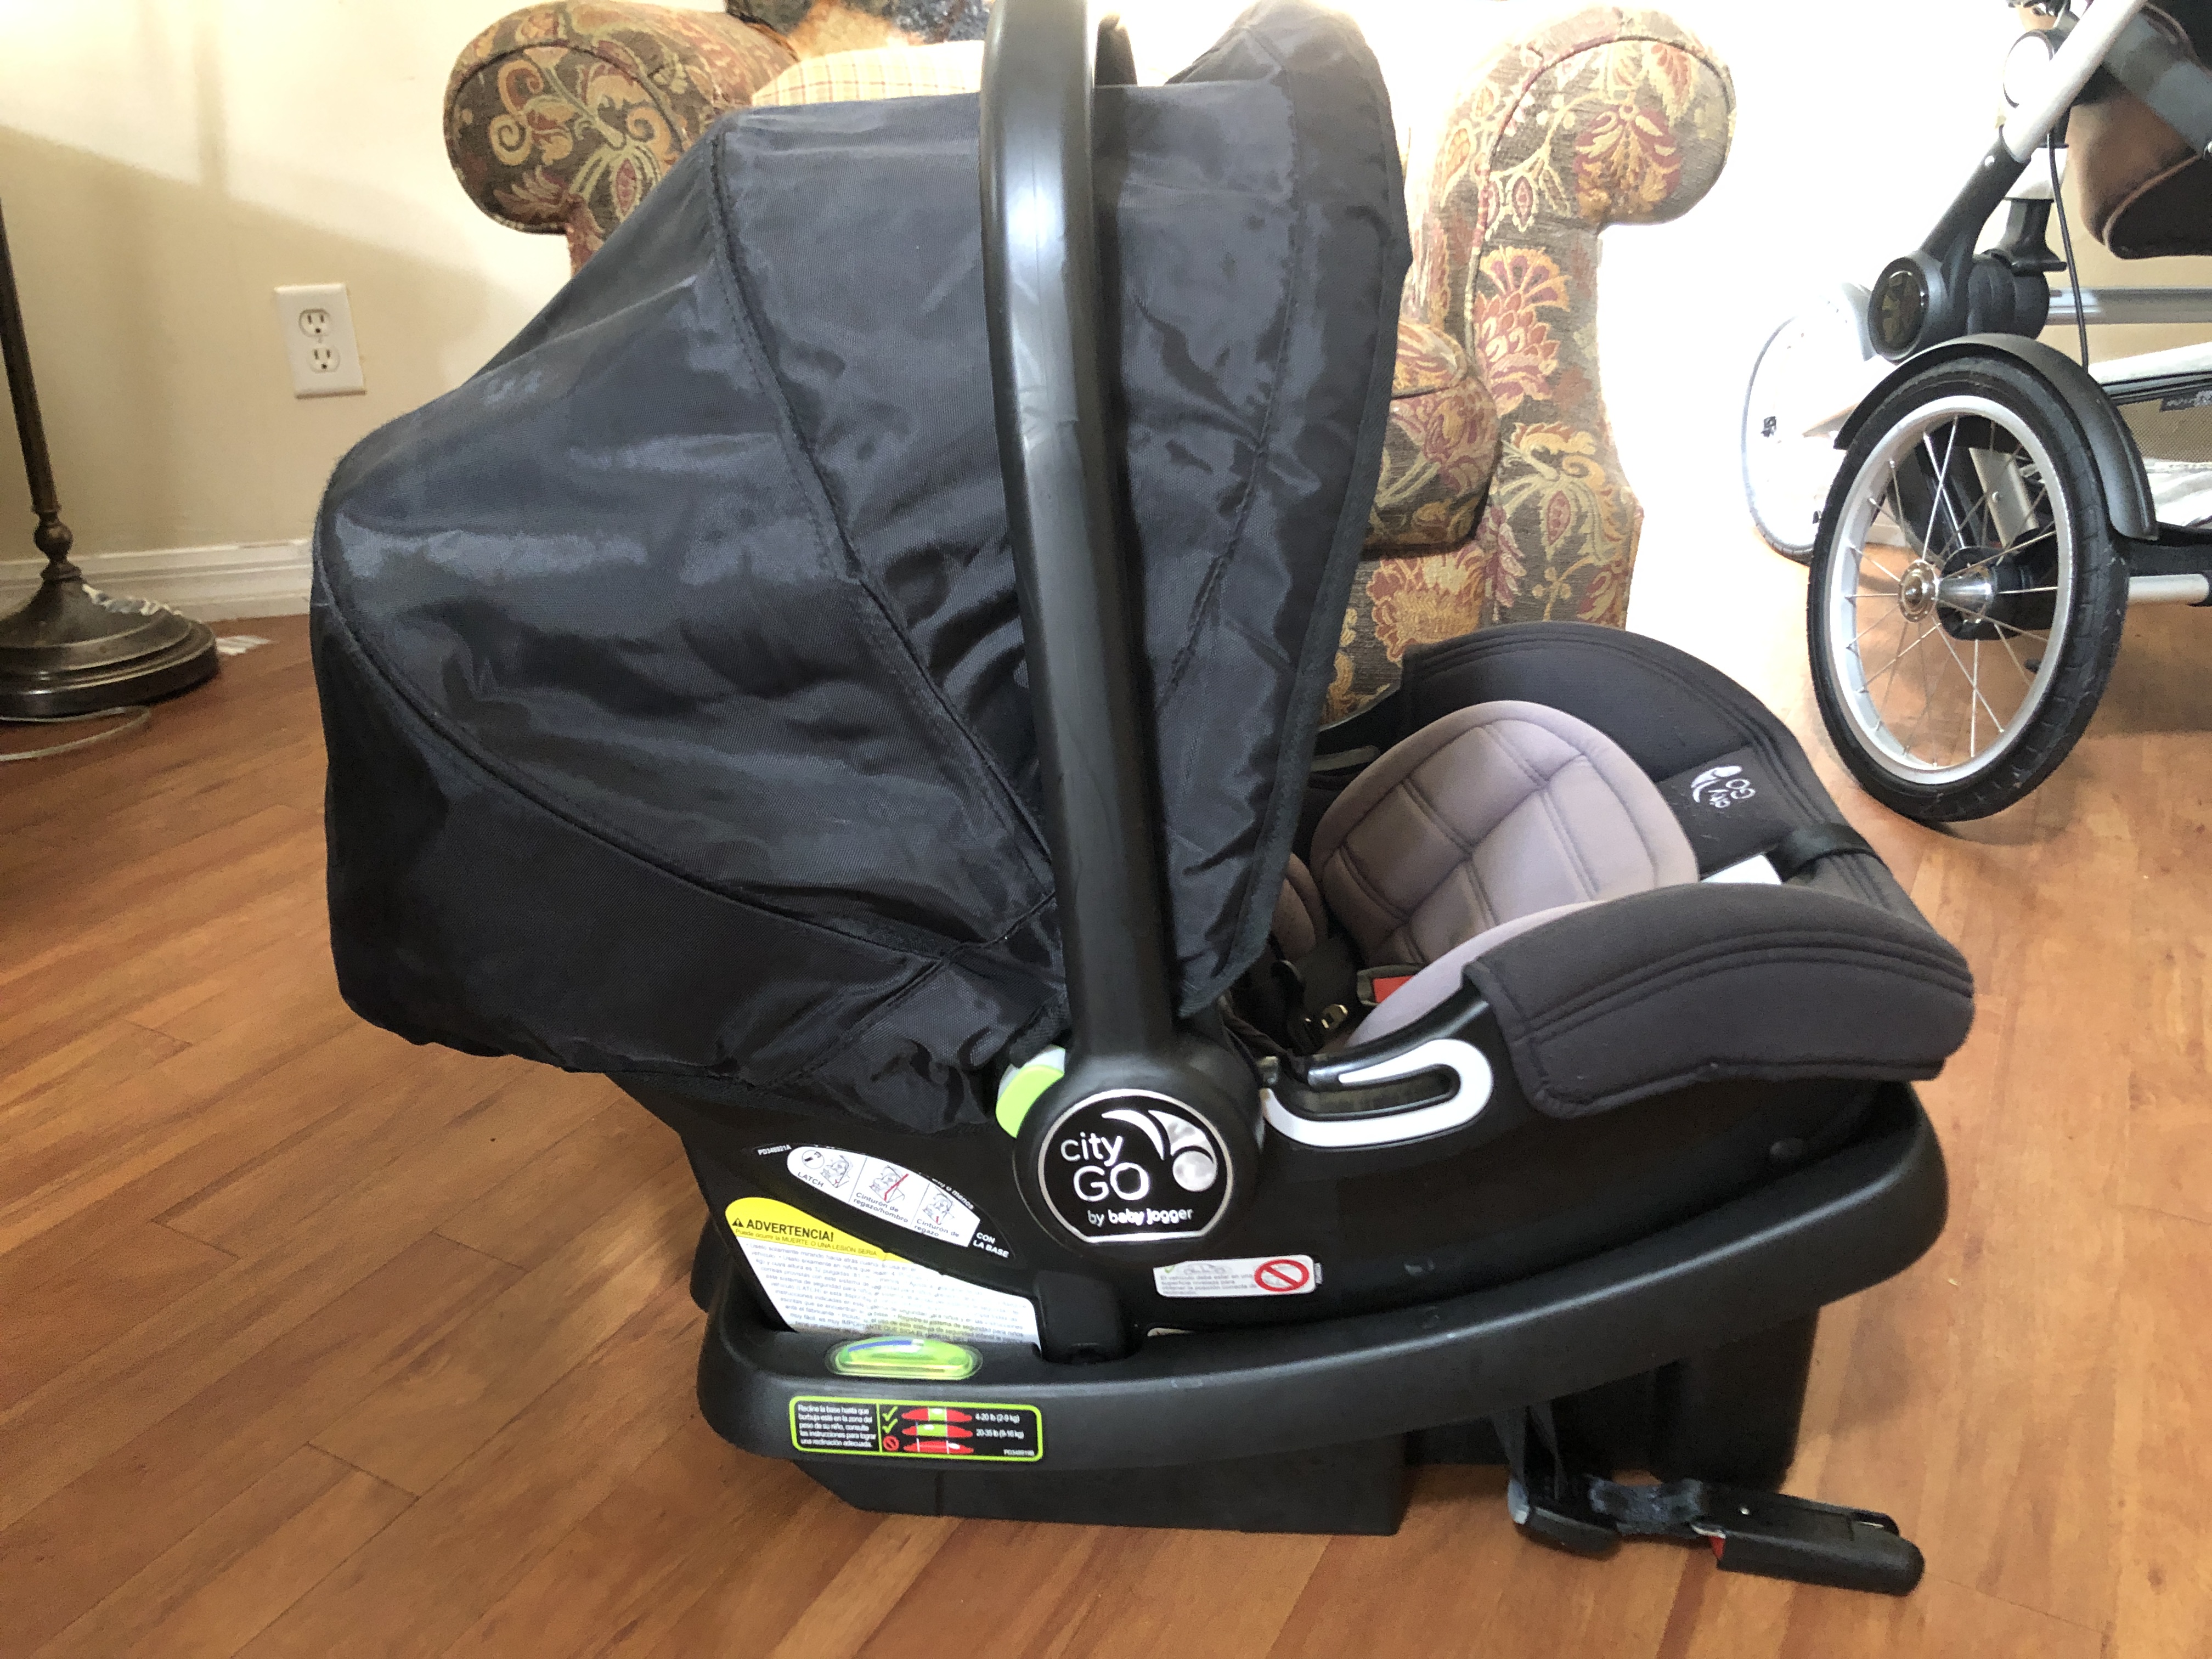 baby jogger city go 2 infant car seat